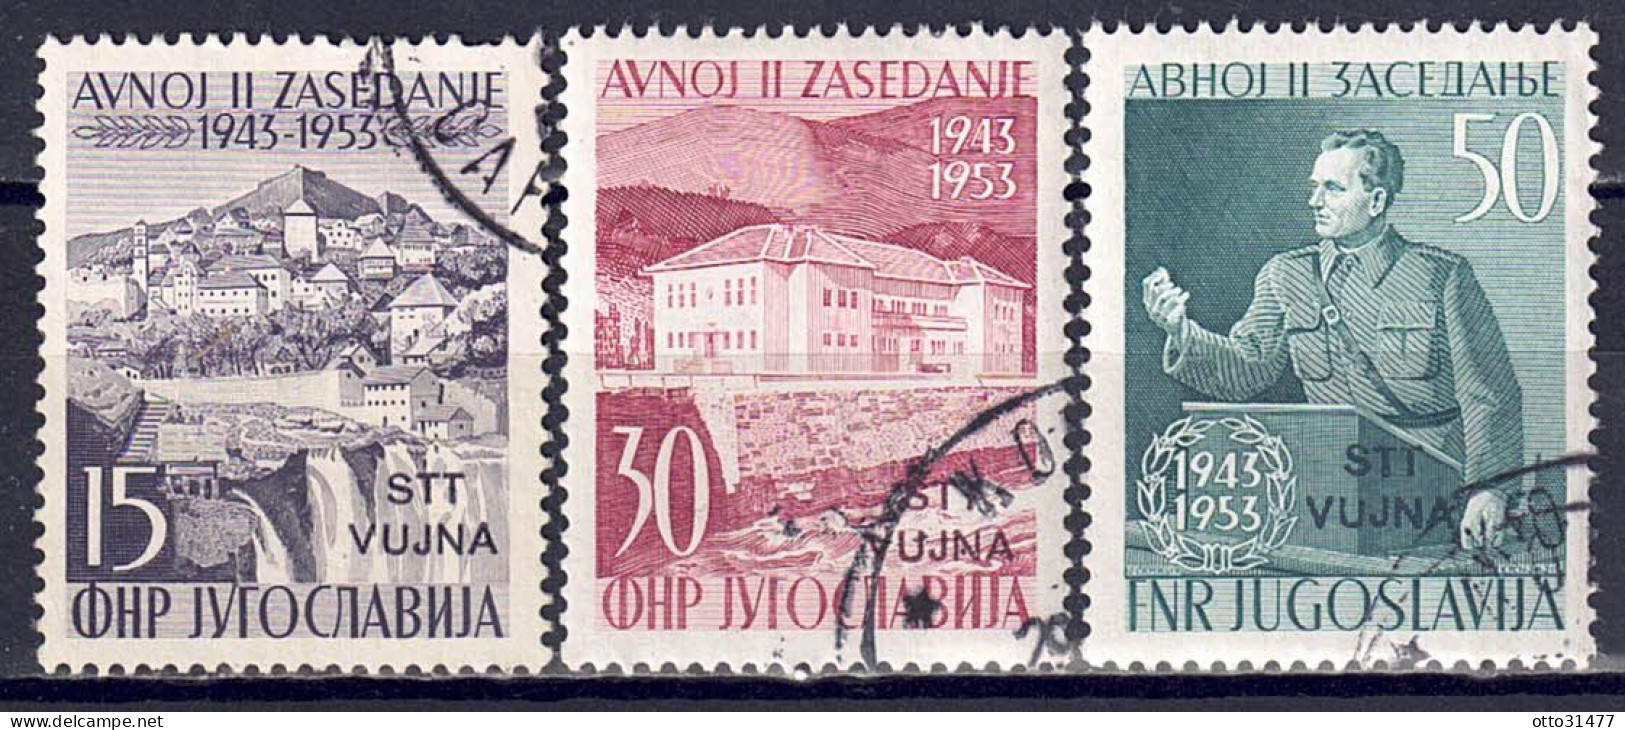 Italien / Triest Zone B - 1953 - AVNOJ, Nr. 107 - 109, Gestempelt / Used - Used